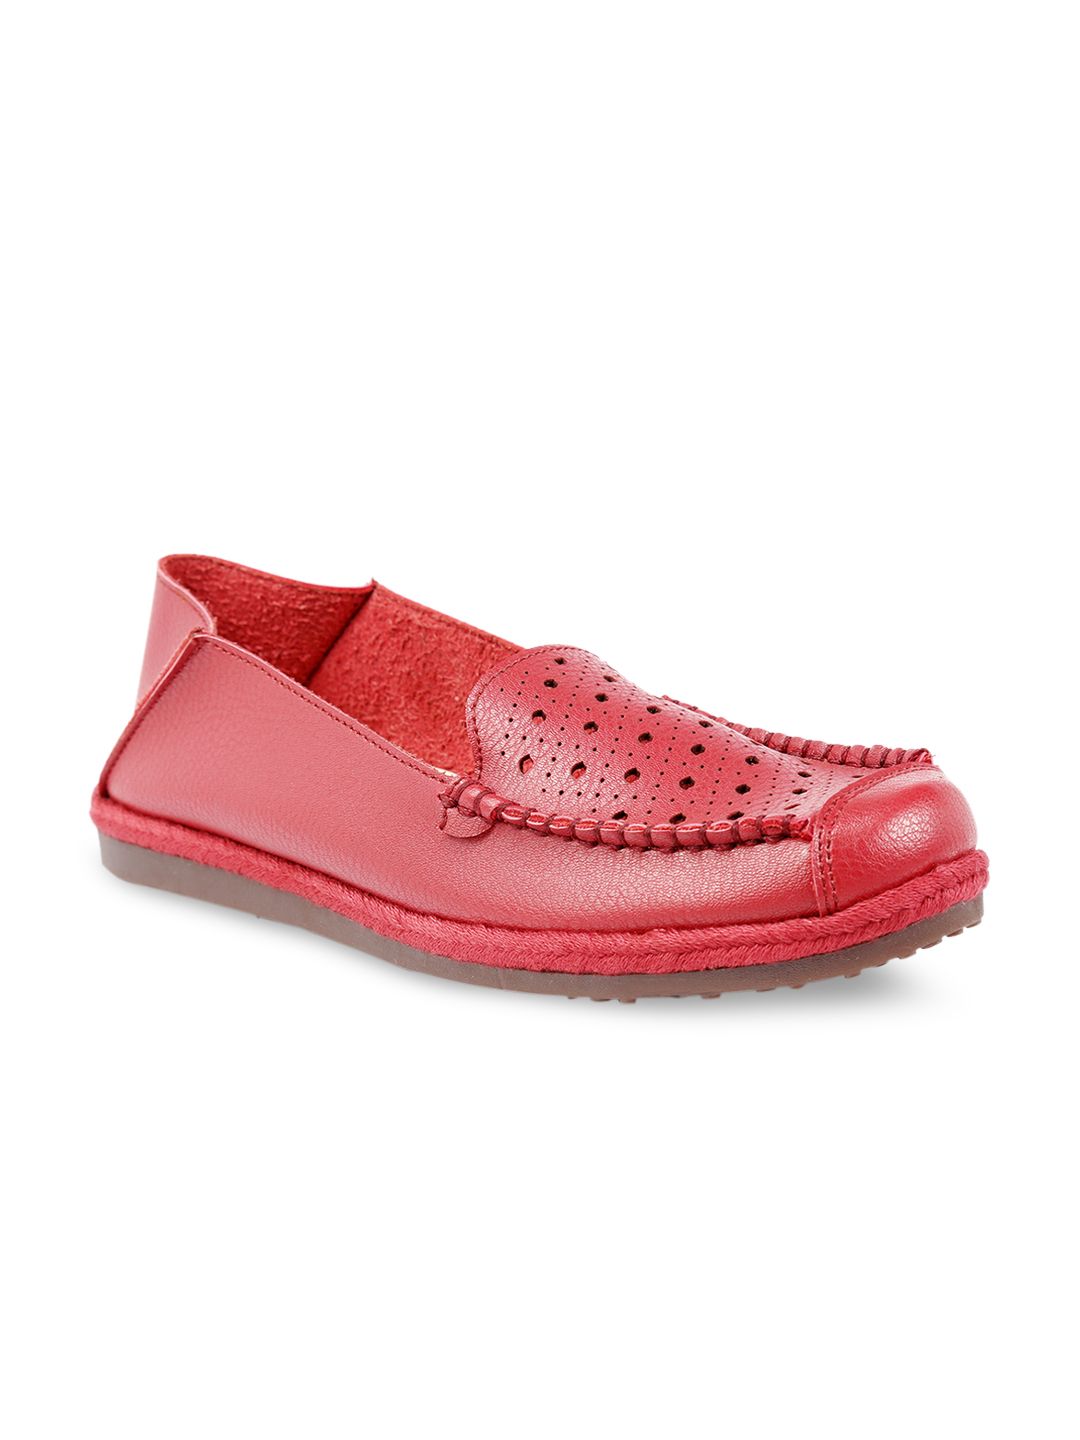 meriggiare Women Red Loafers Price in India